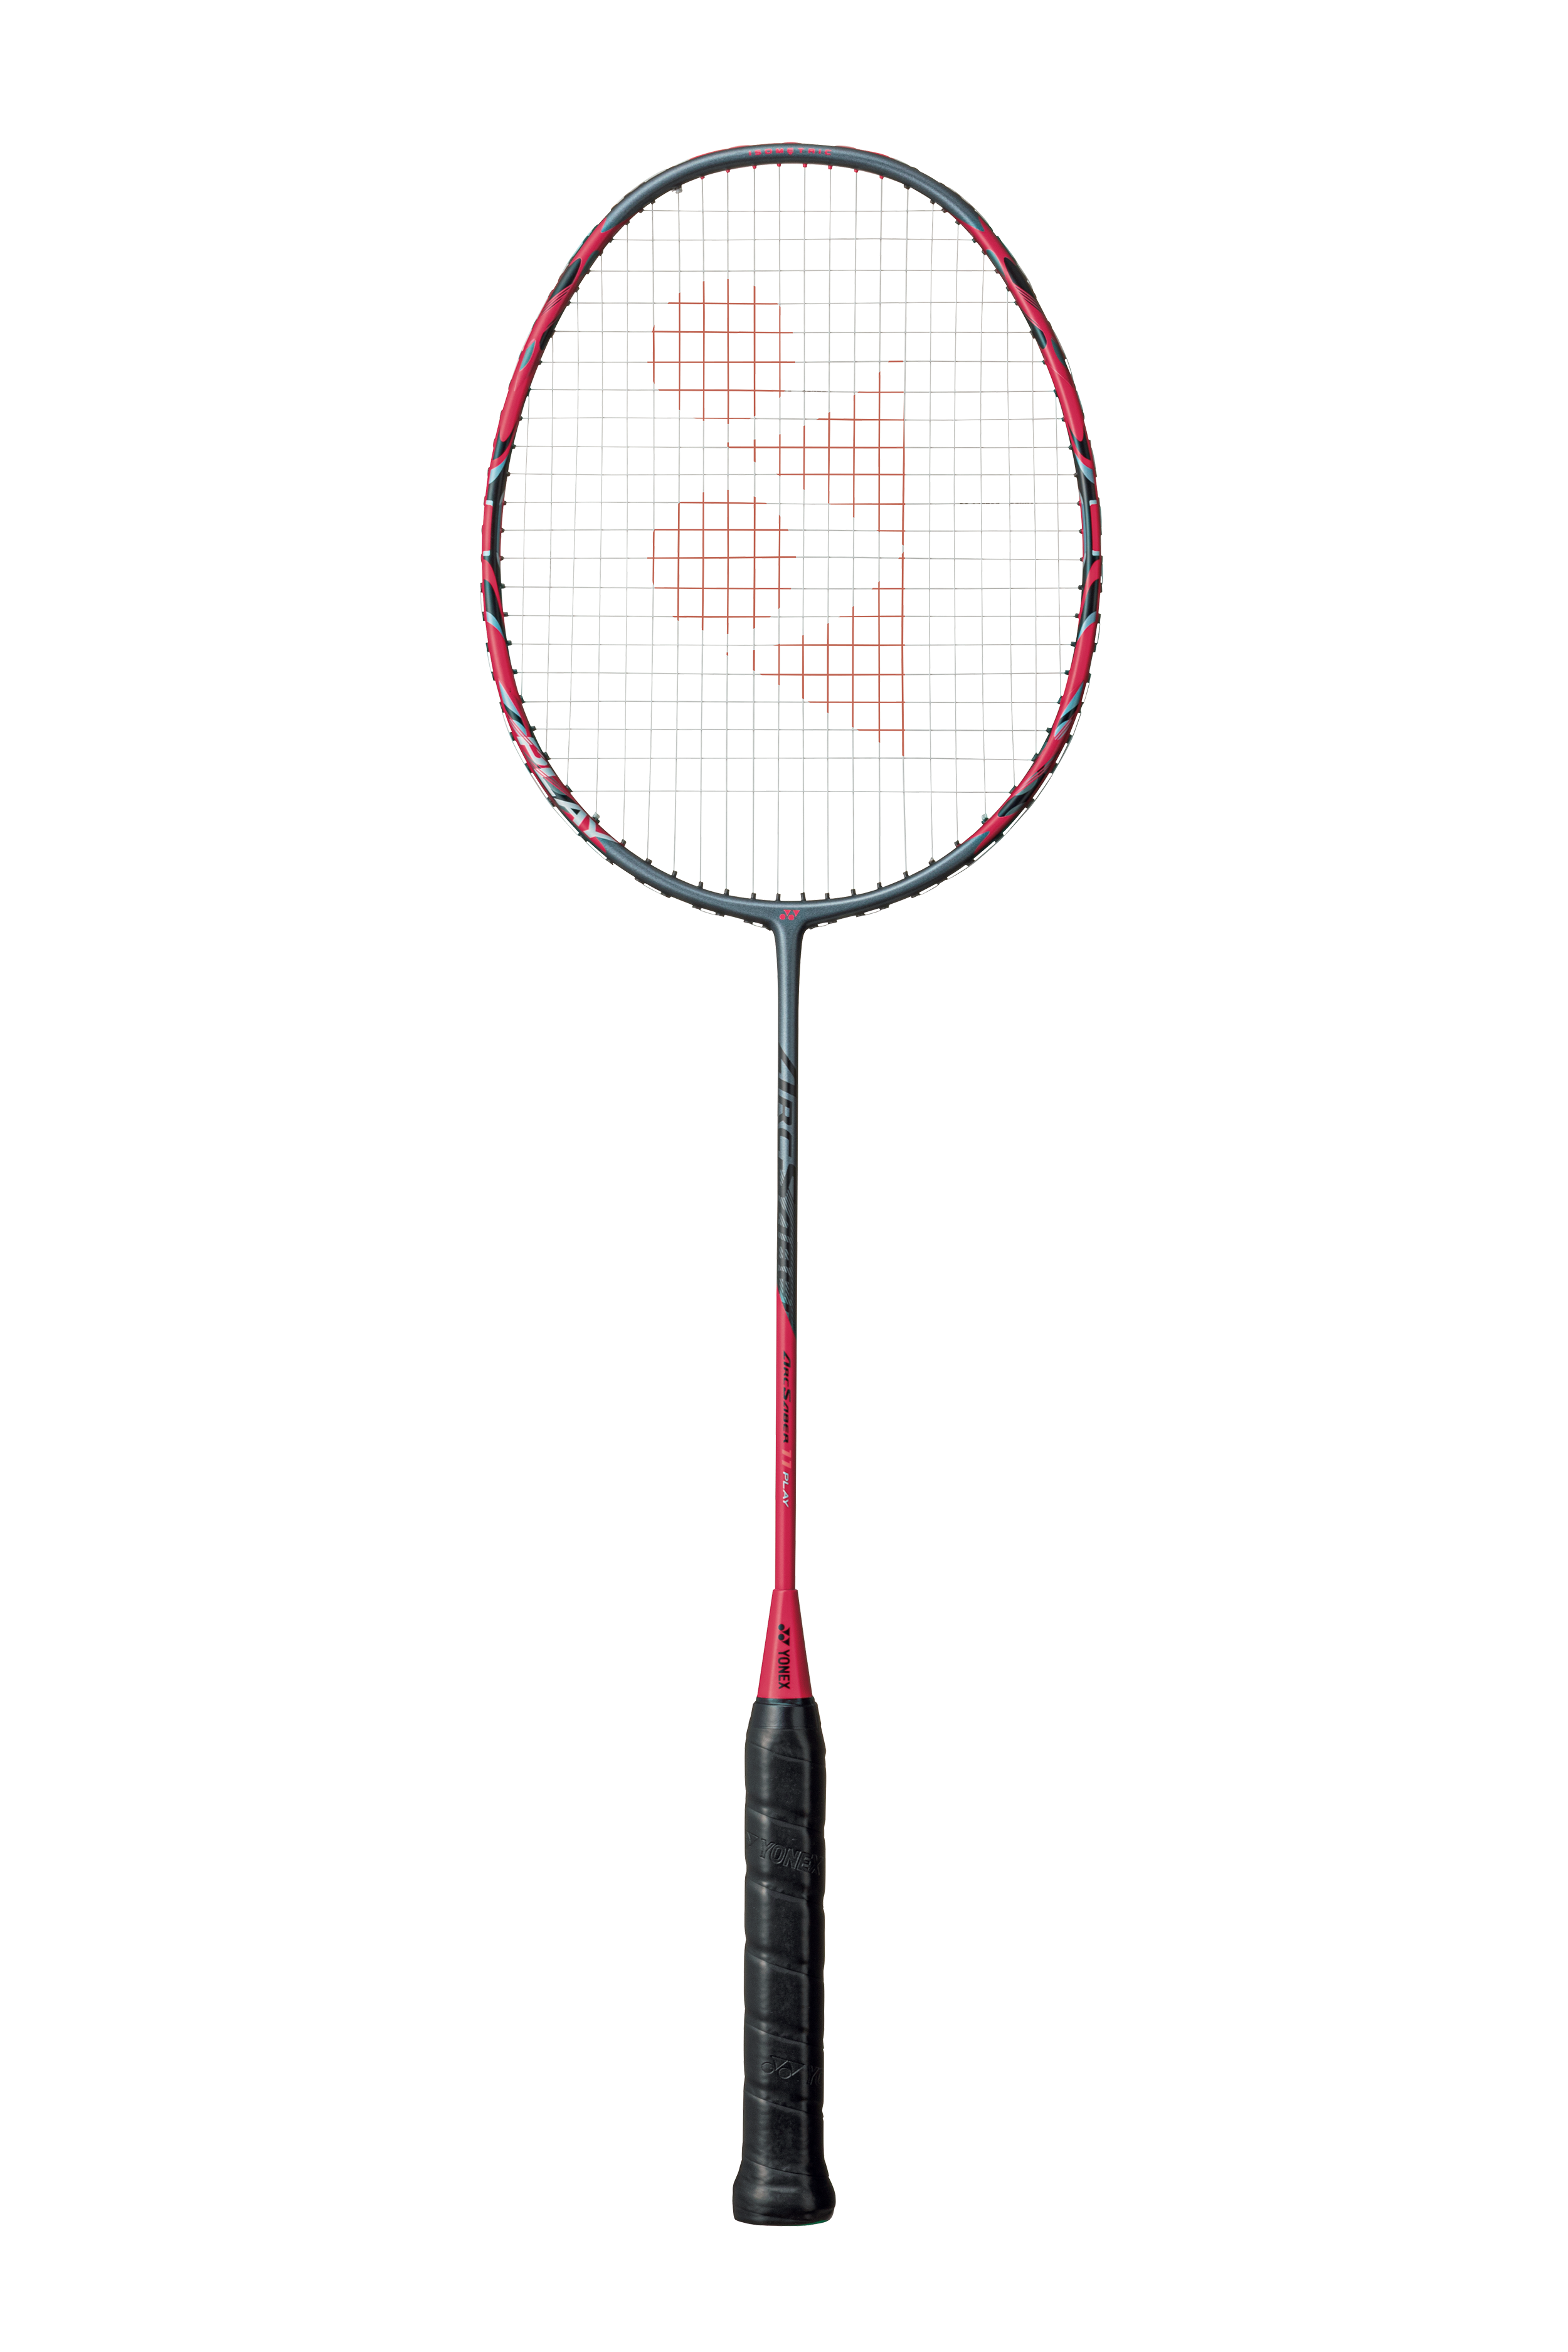 YONEX Arcsaber 11 PLAY Badminton Racquet (Grayish Pearl) 4U6 Strung ARC11-PL